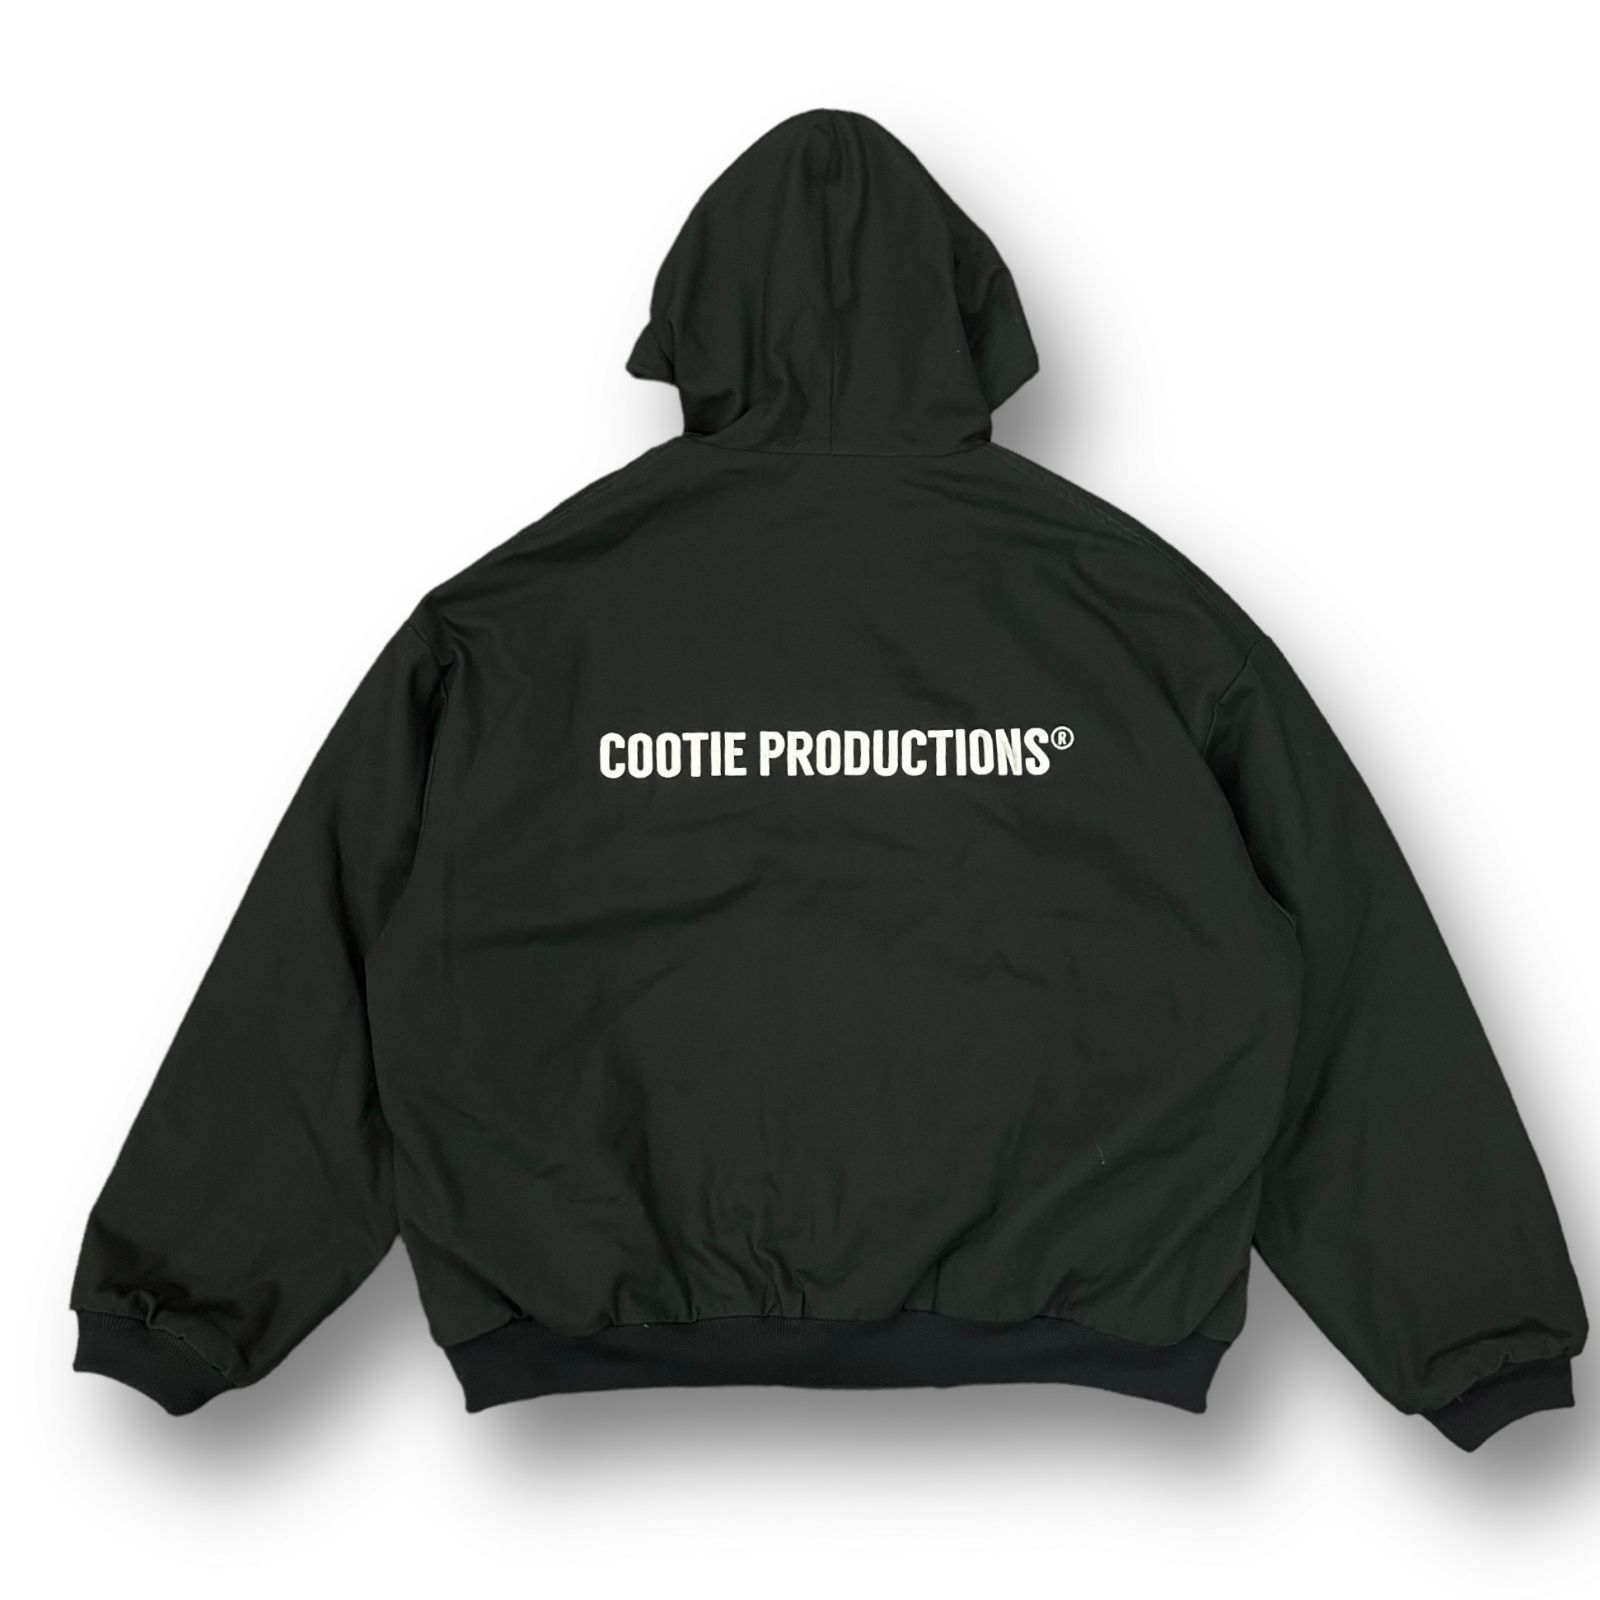 COOTIE PRODUCTIONS/OX Hoodie Blouson